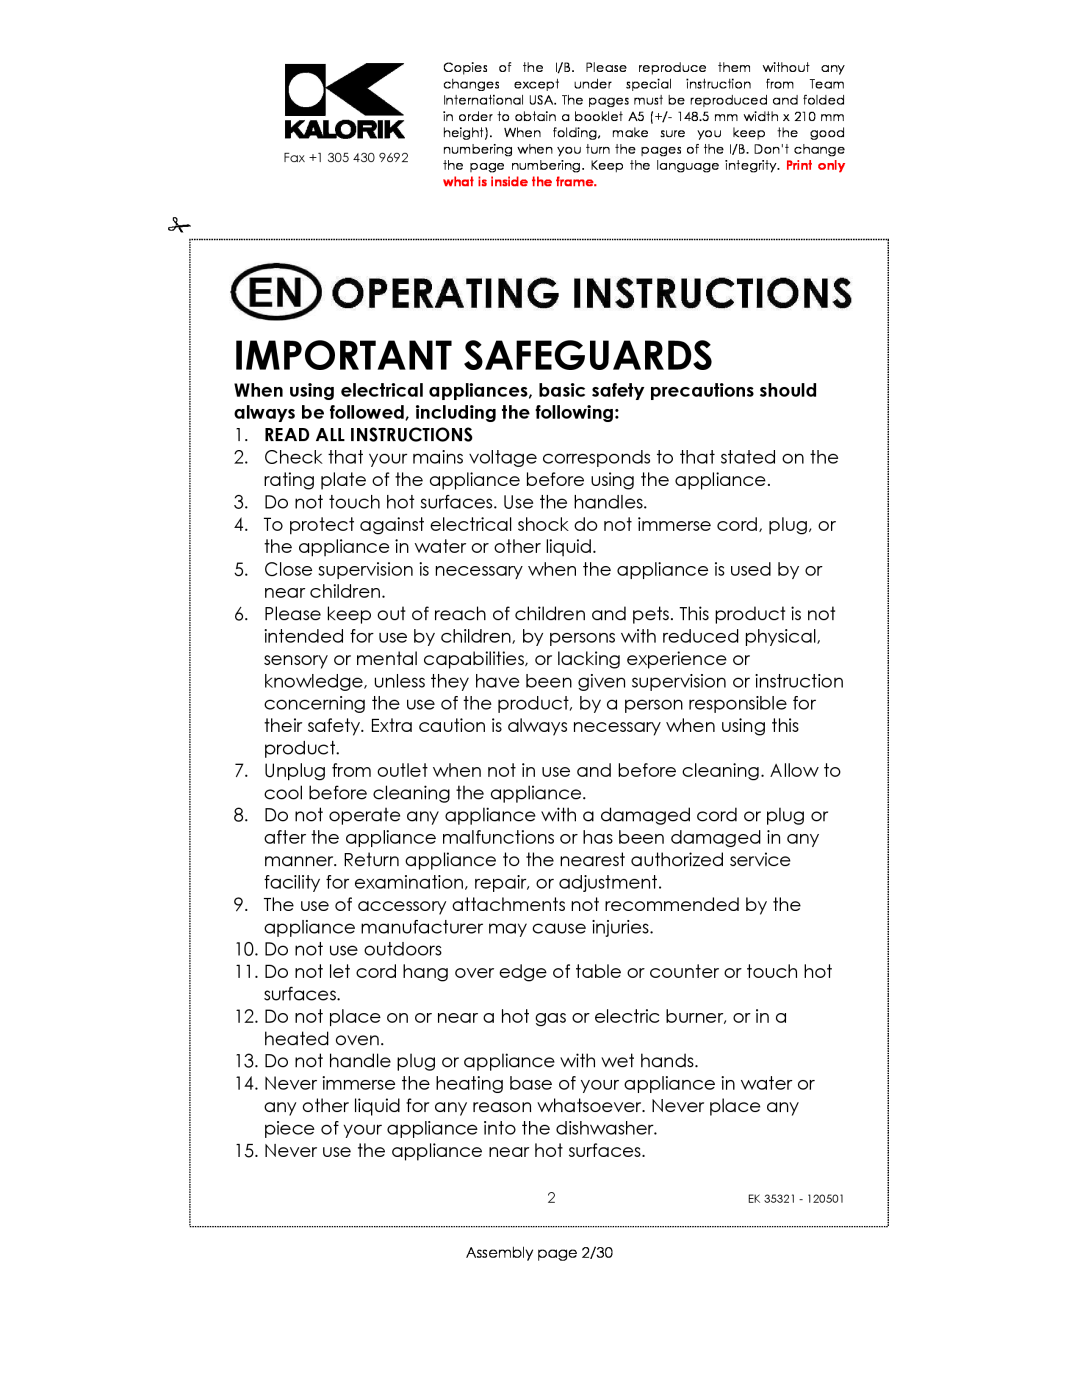 Kalorik EK35321 manual Important Safeguards, Read All Instructions 